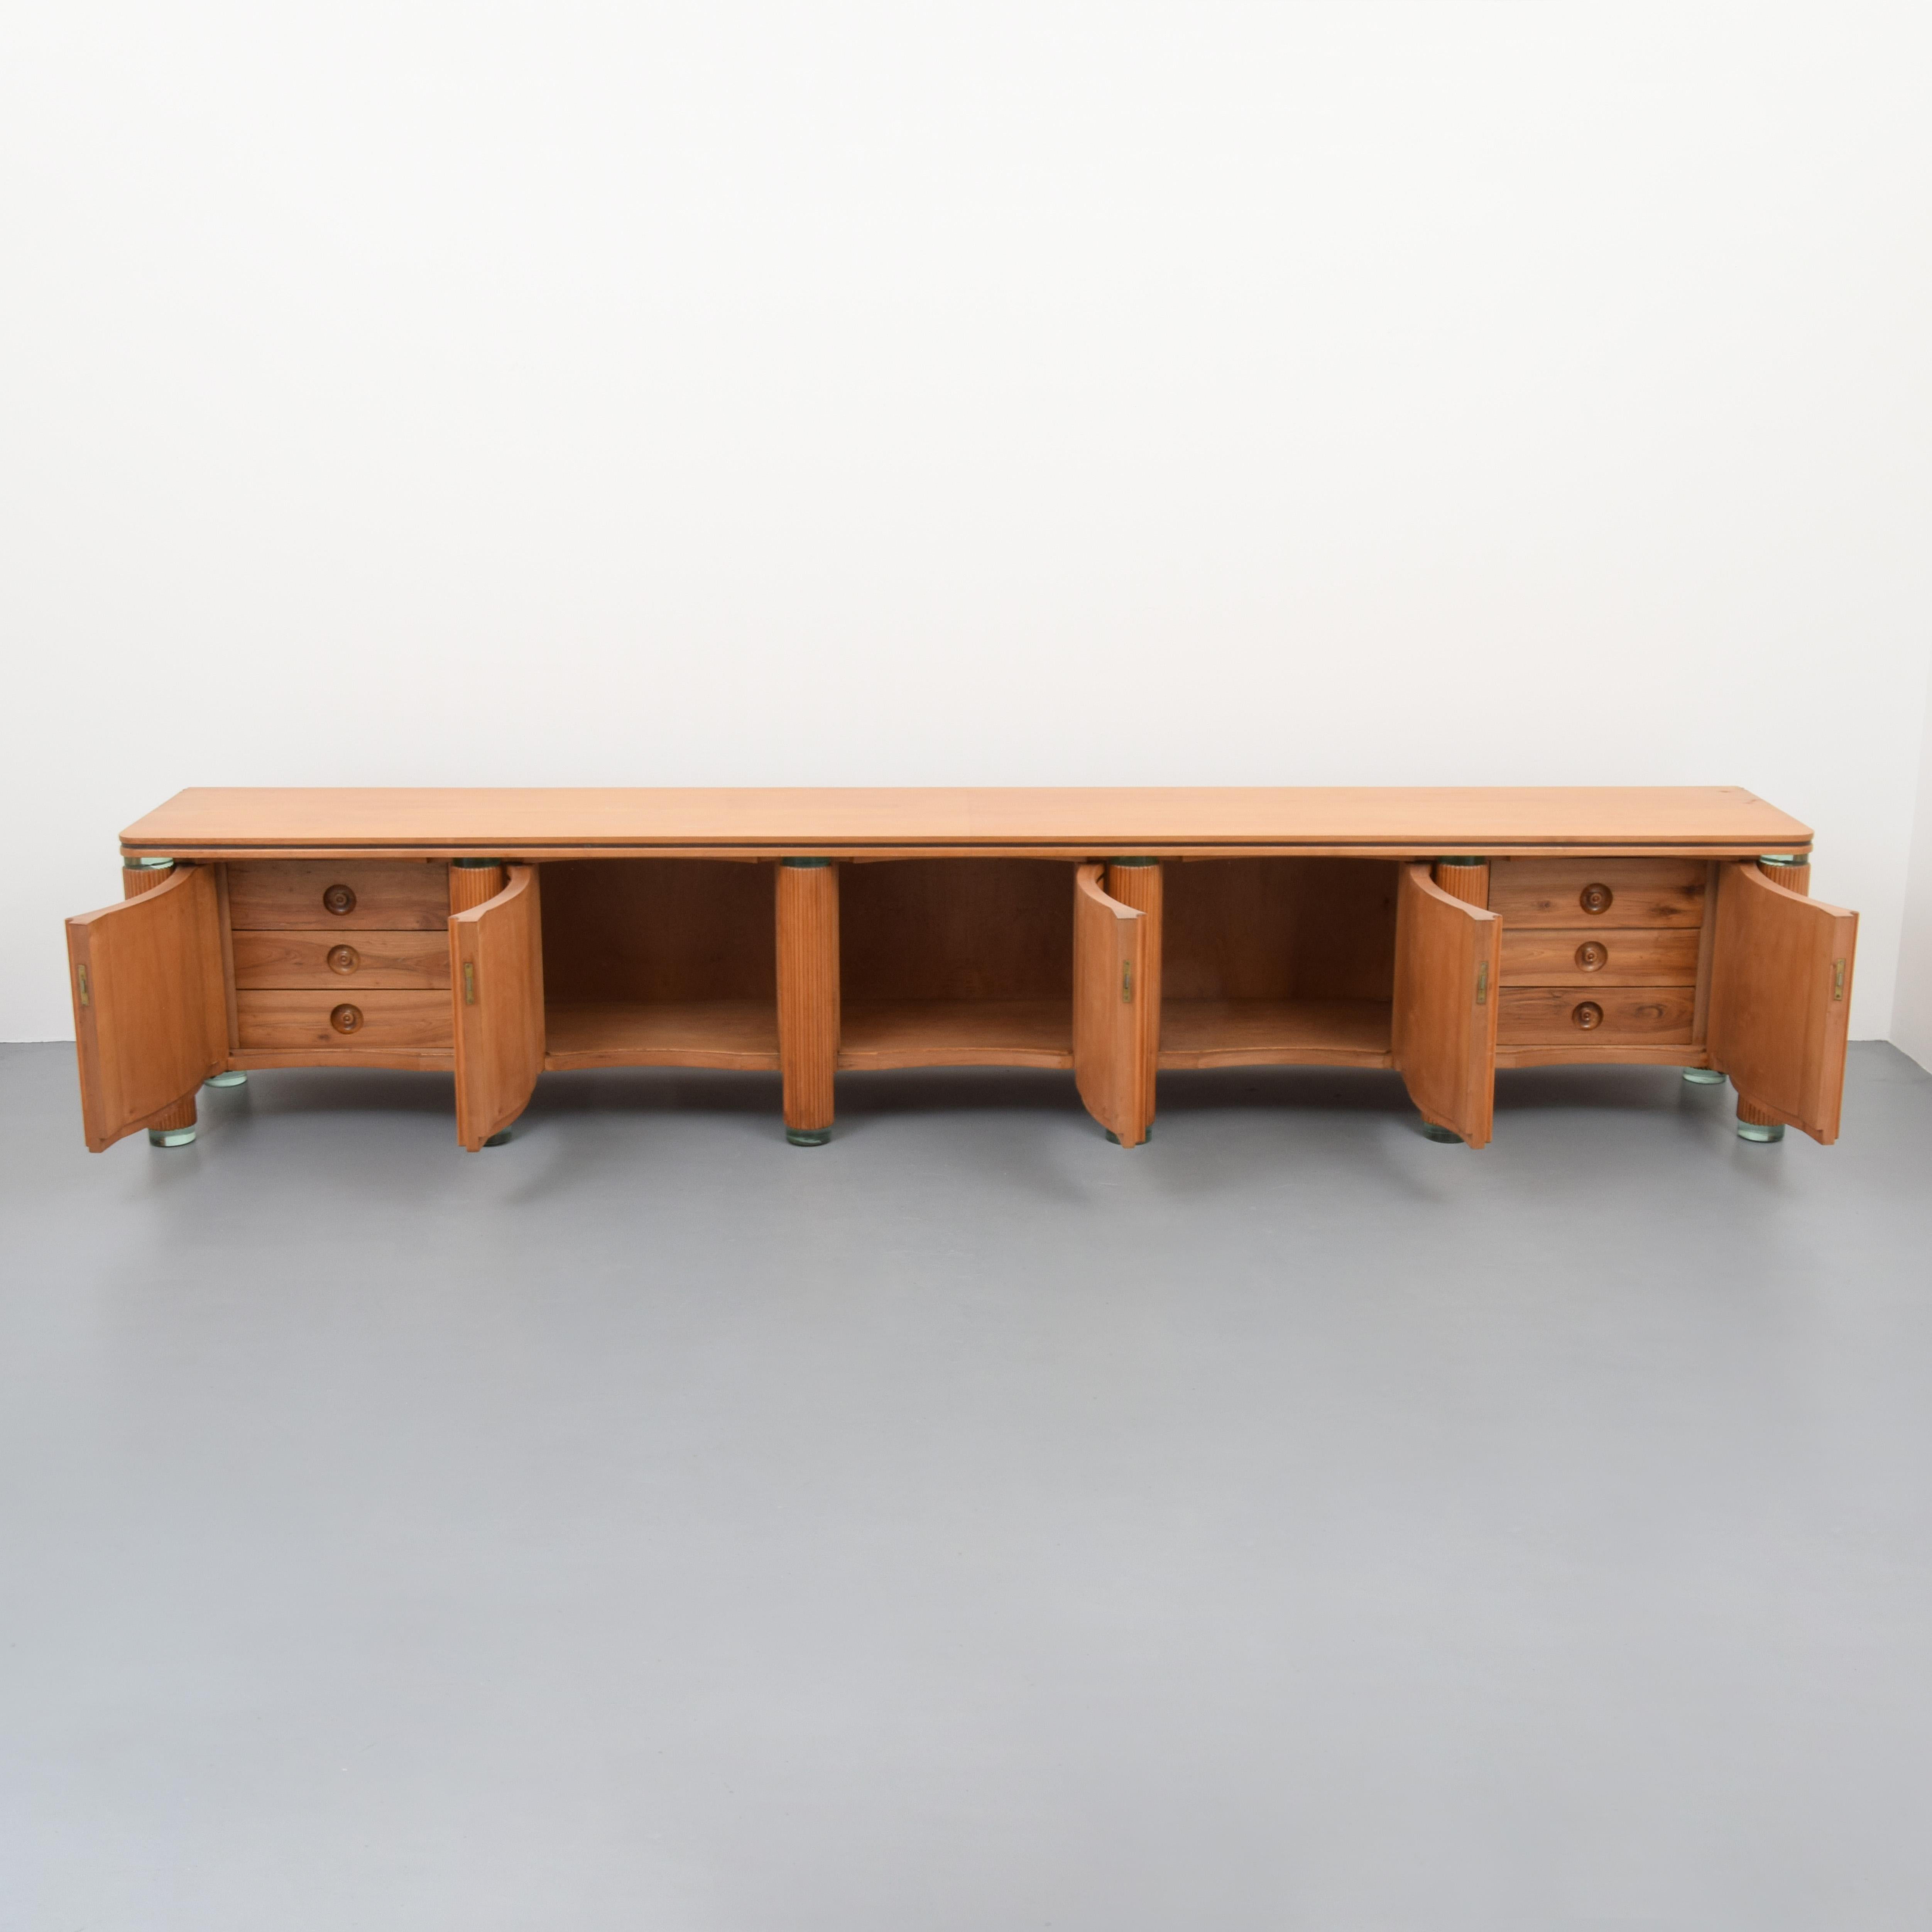 Futurist Monumental Cabinet Attributed to Giuseppe Terragni For Sale